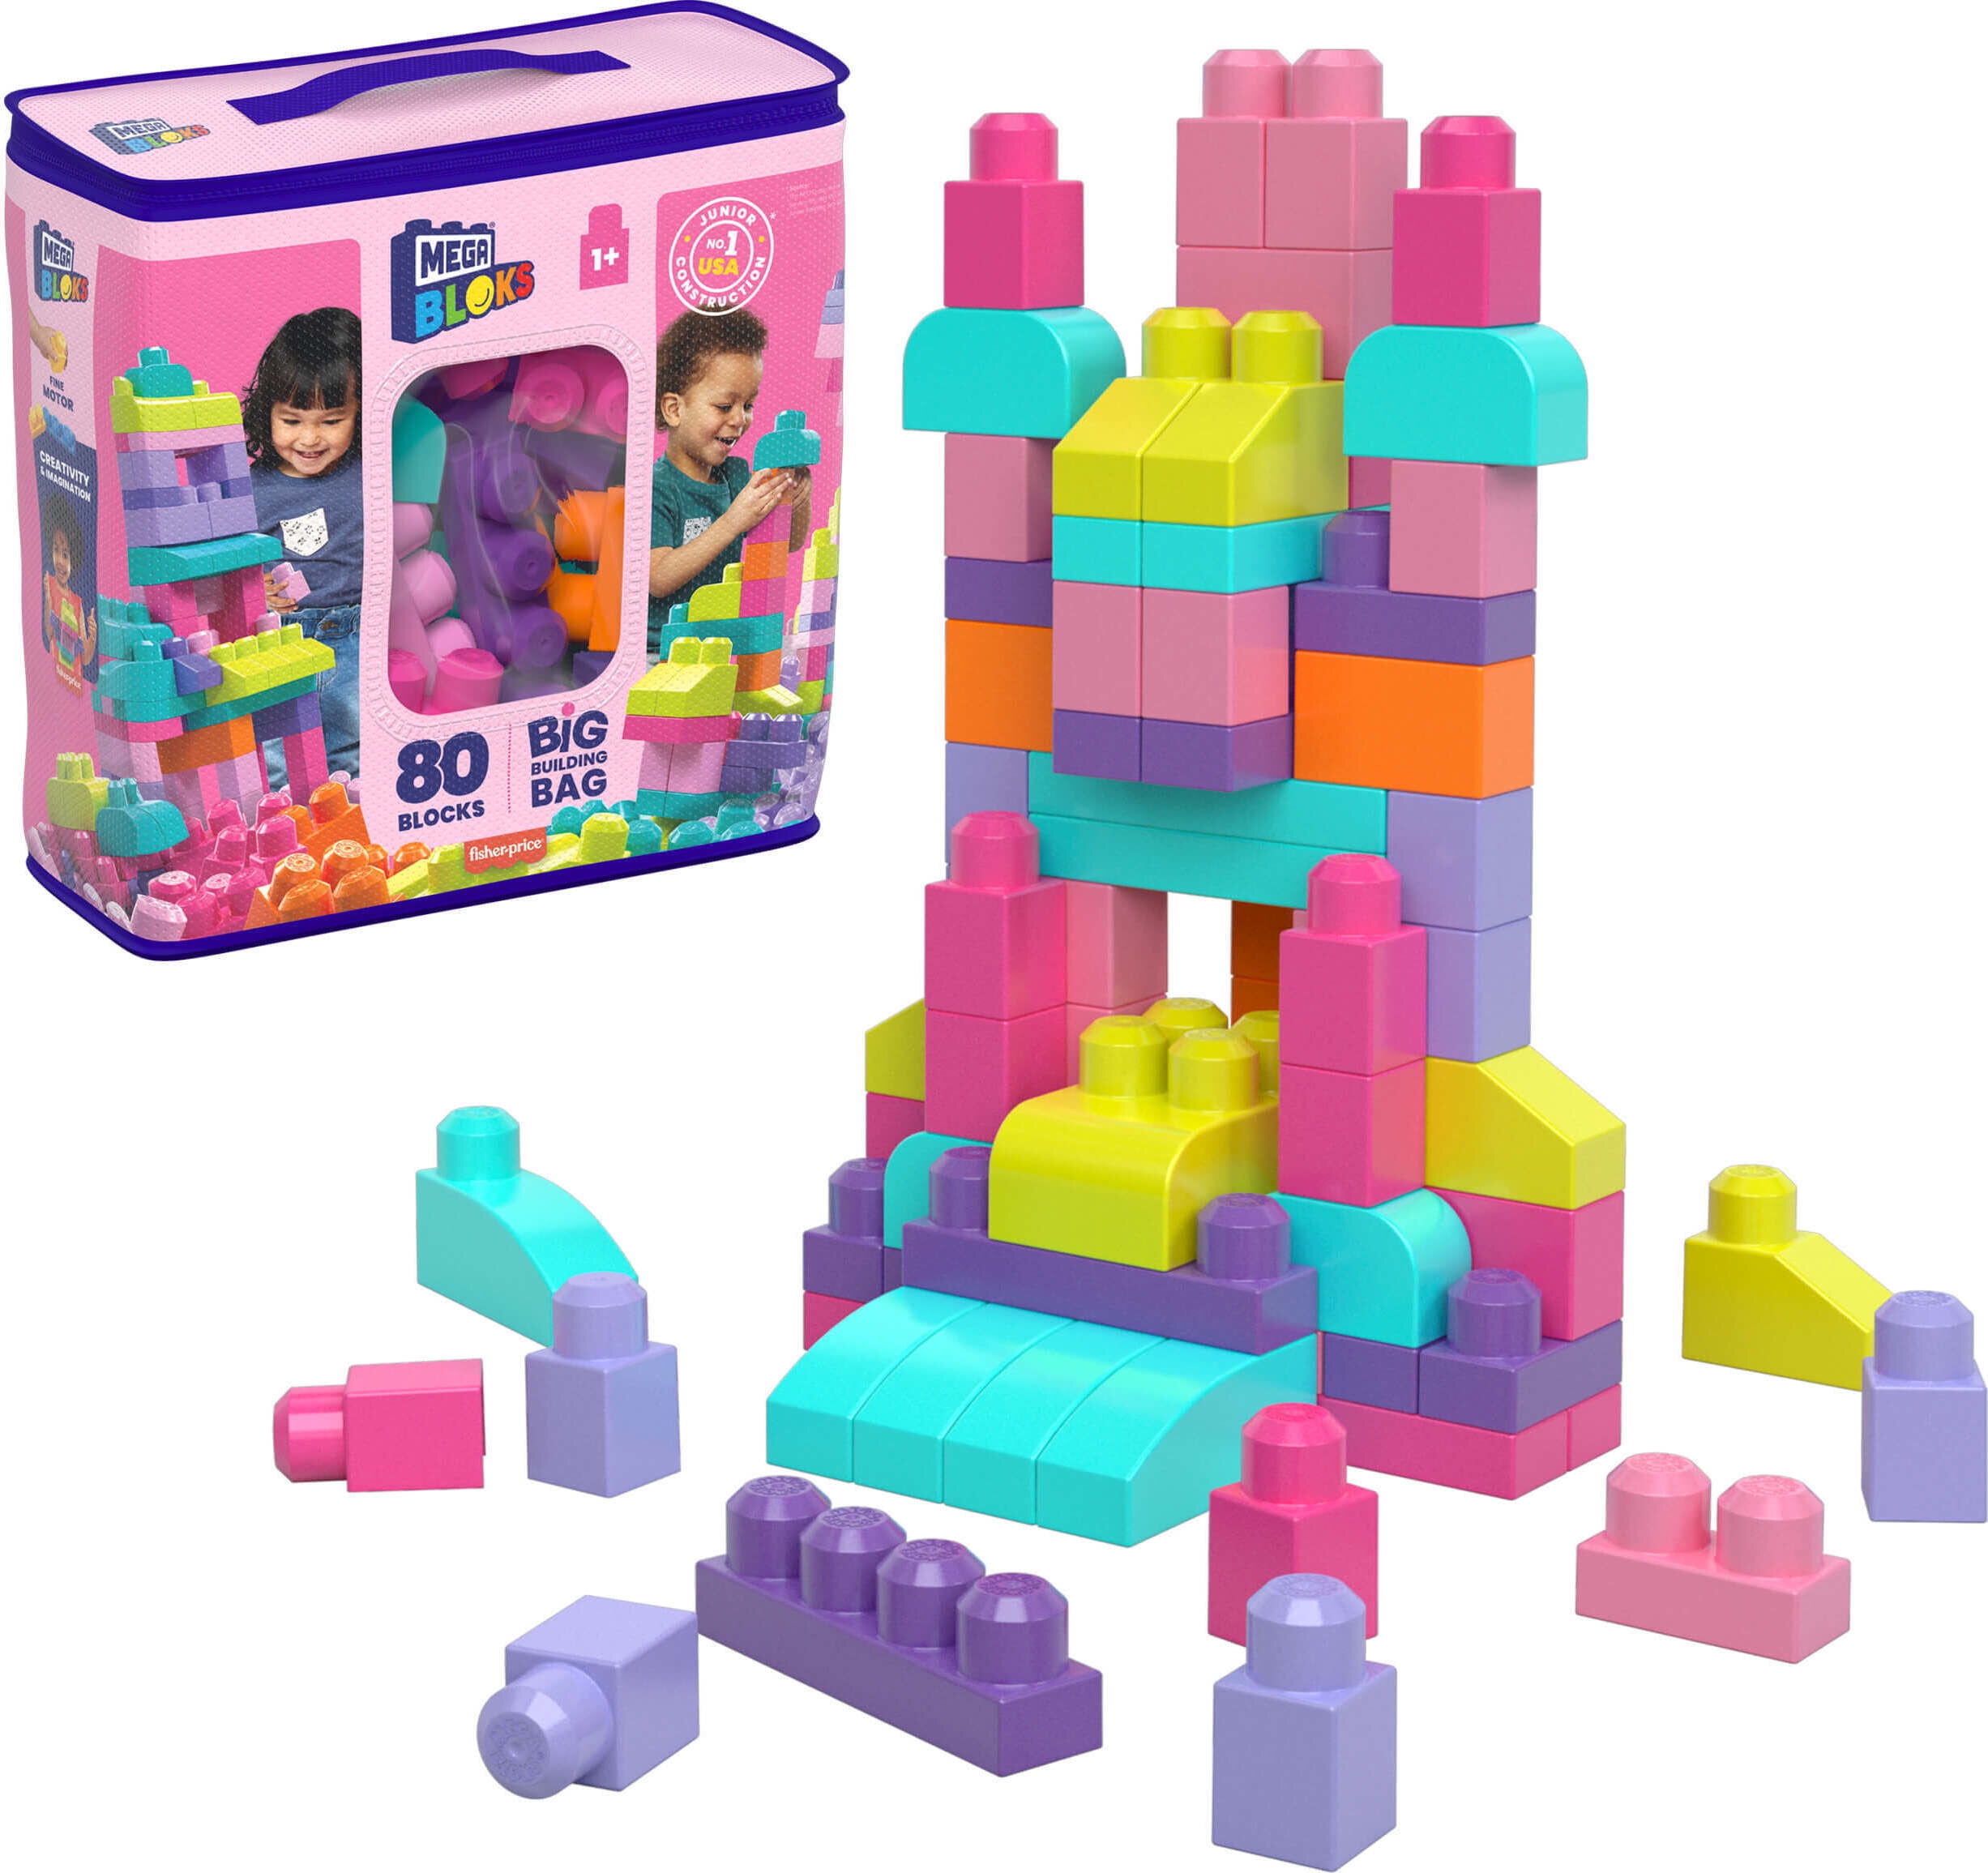 Tomar conciencia Corbata binario MEGA BLOKS Fisher-Price Toy Blocks Pink Big Building Bag with Storage (80  Pieces) for Toddler - Walmart.com